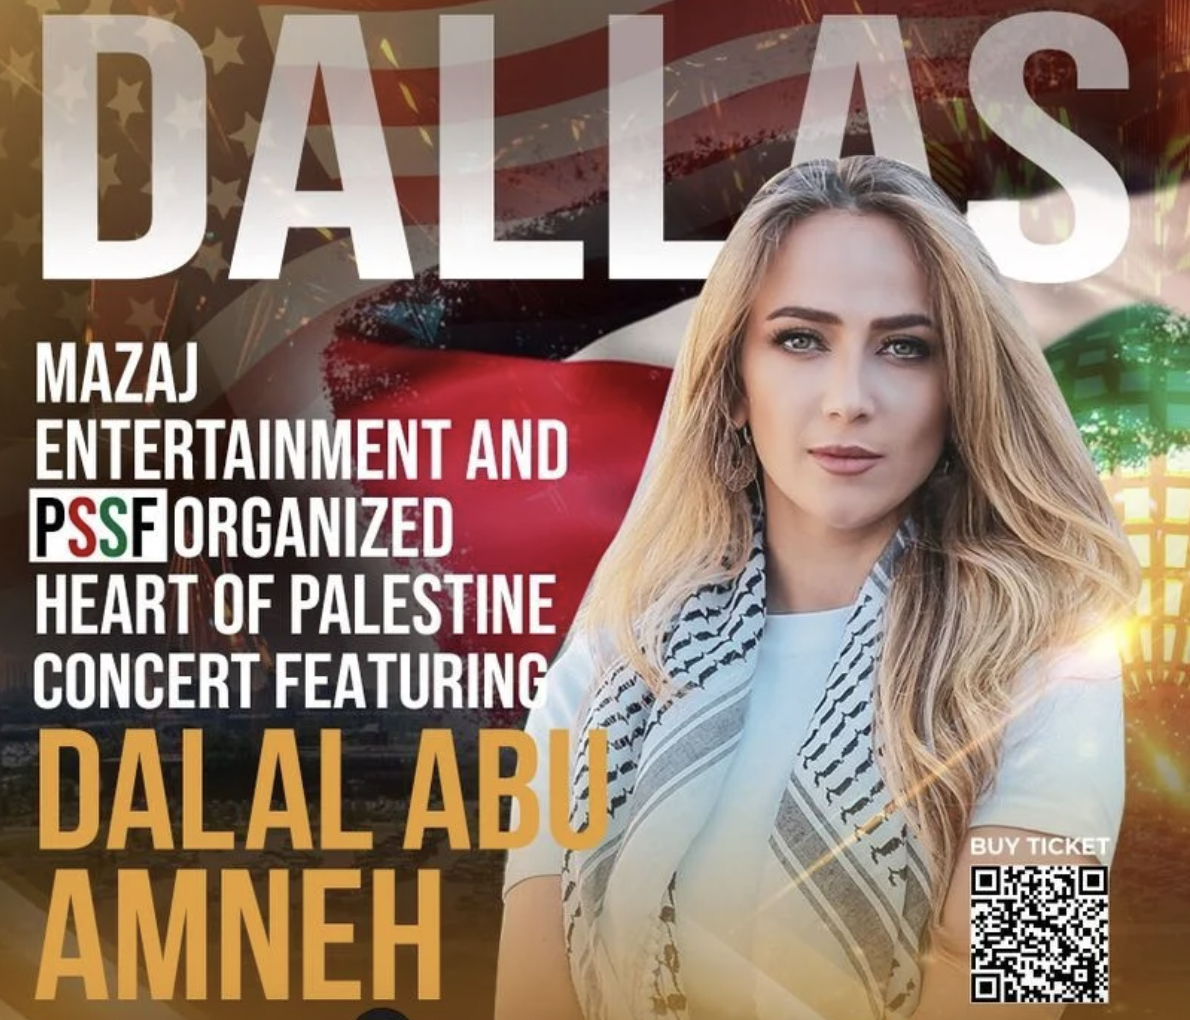 Heart of Palestine / Dalal in concert